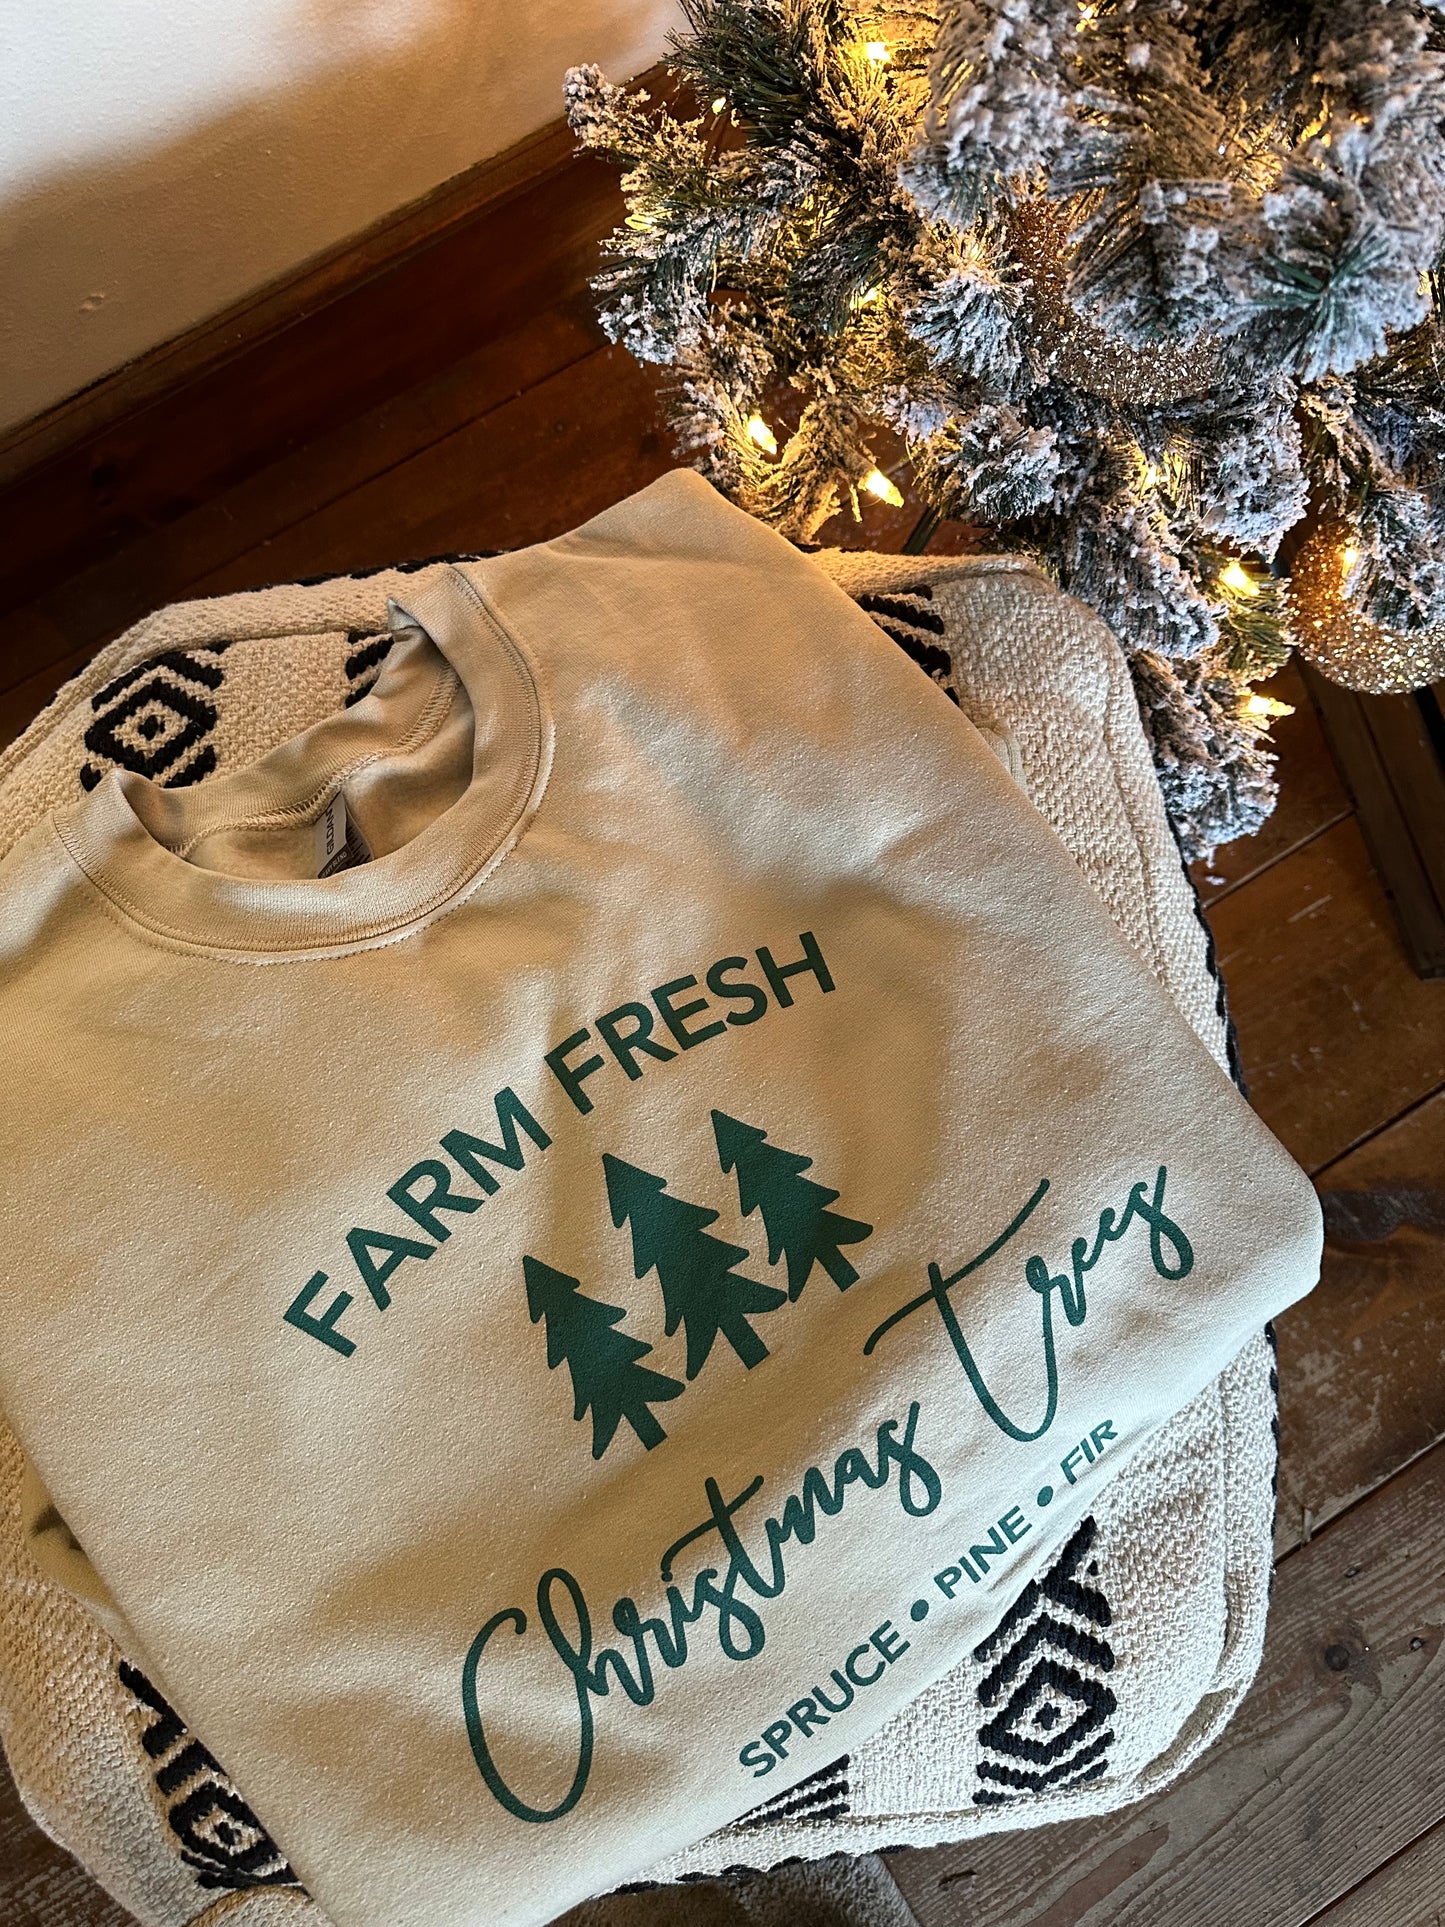 Farm Fresh Christmas Trees Crewneck